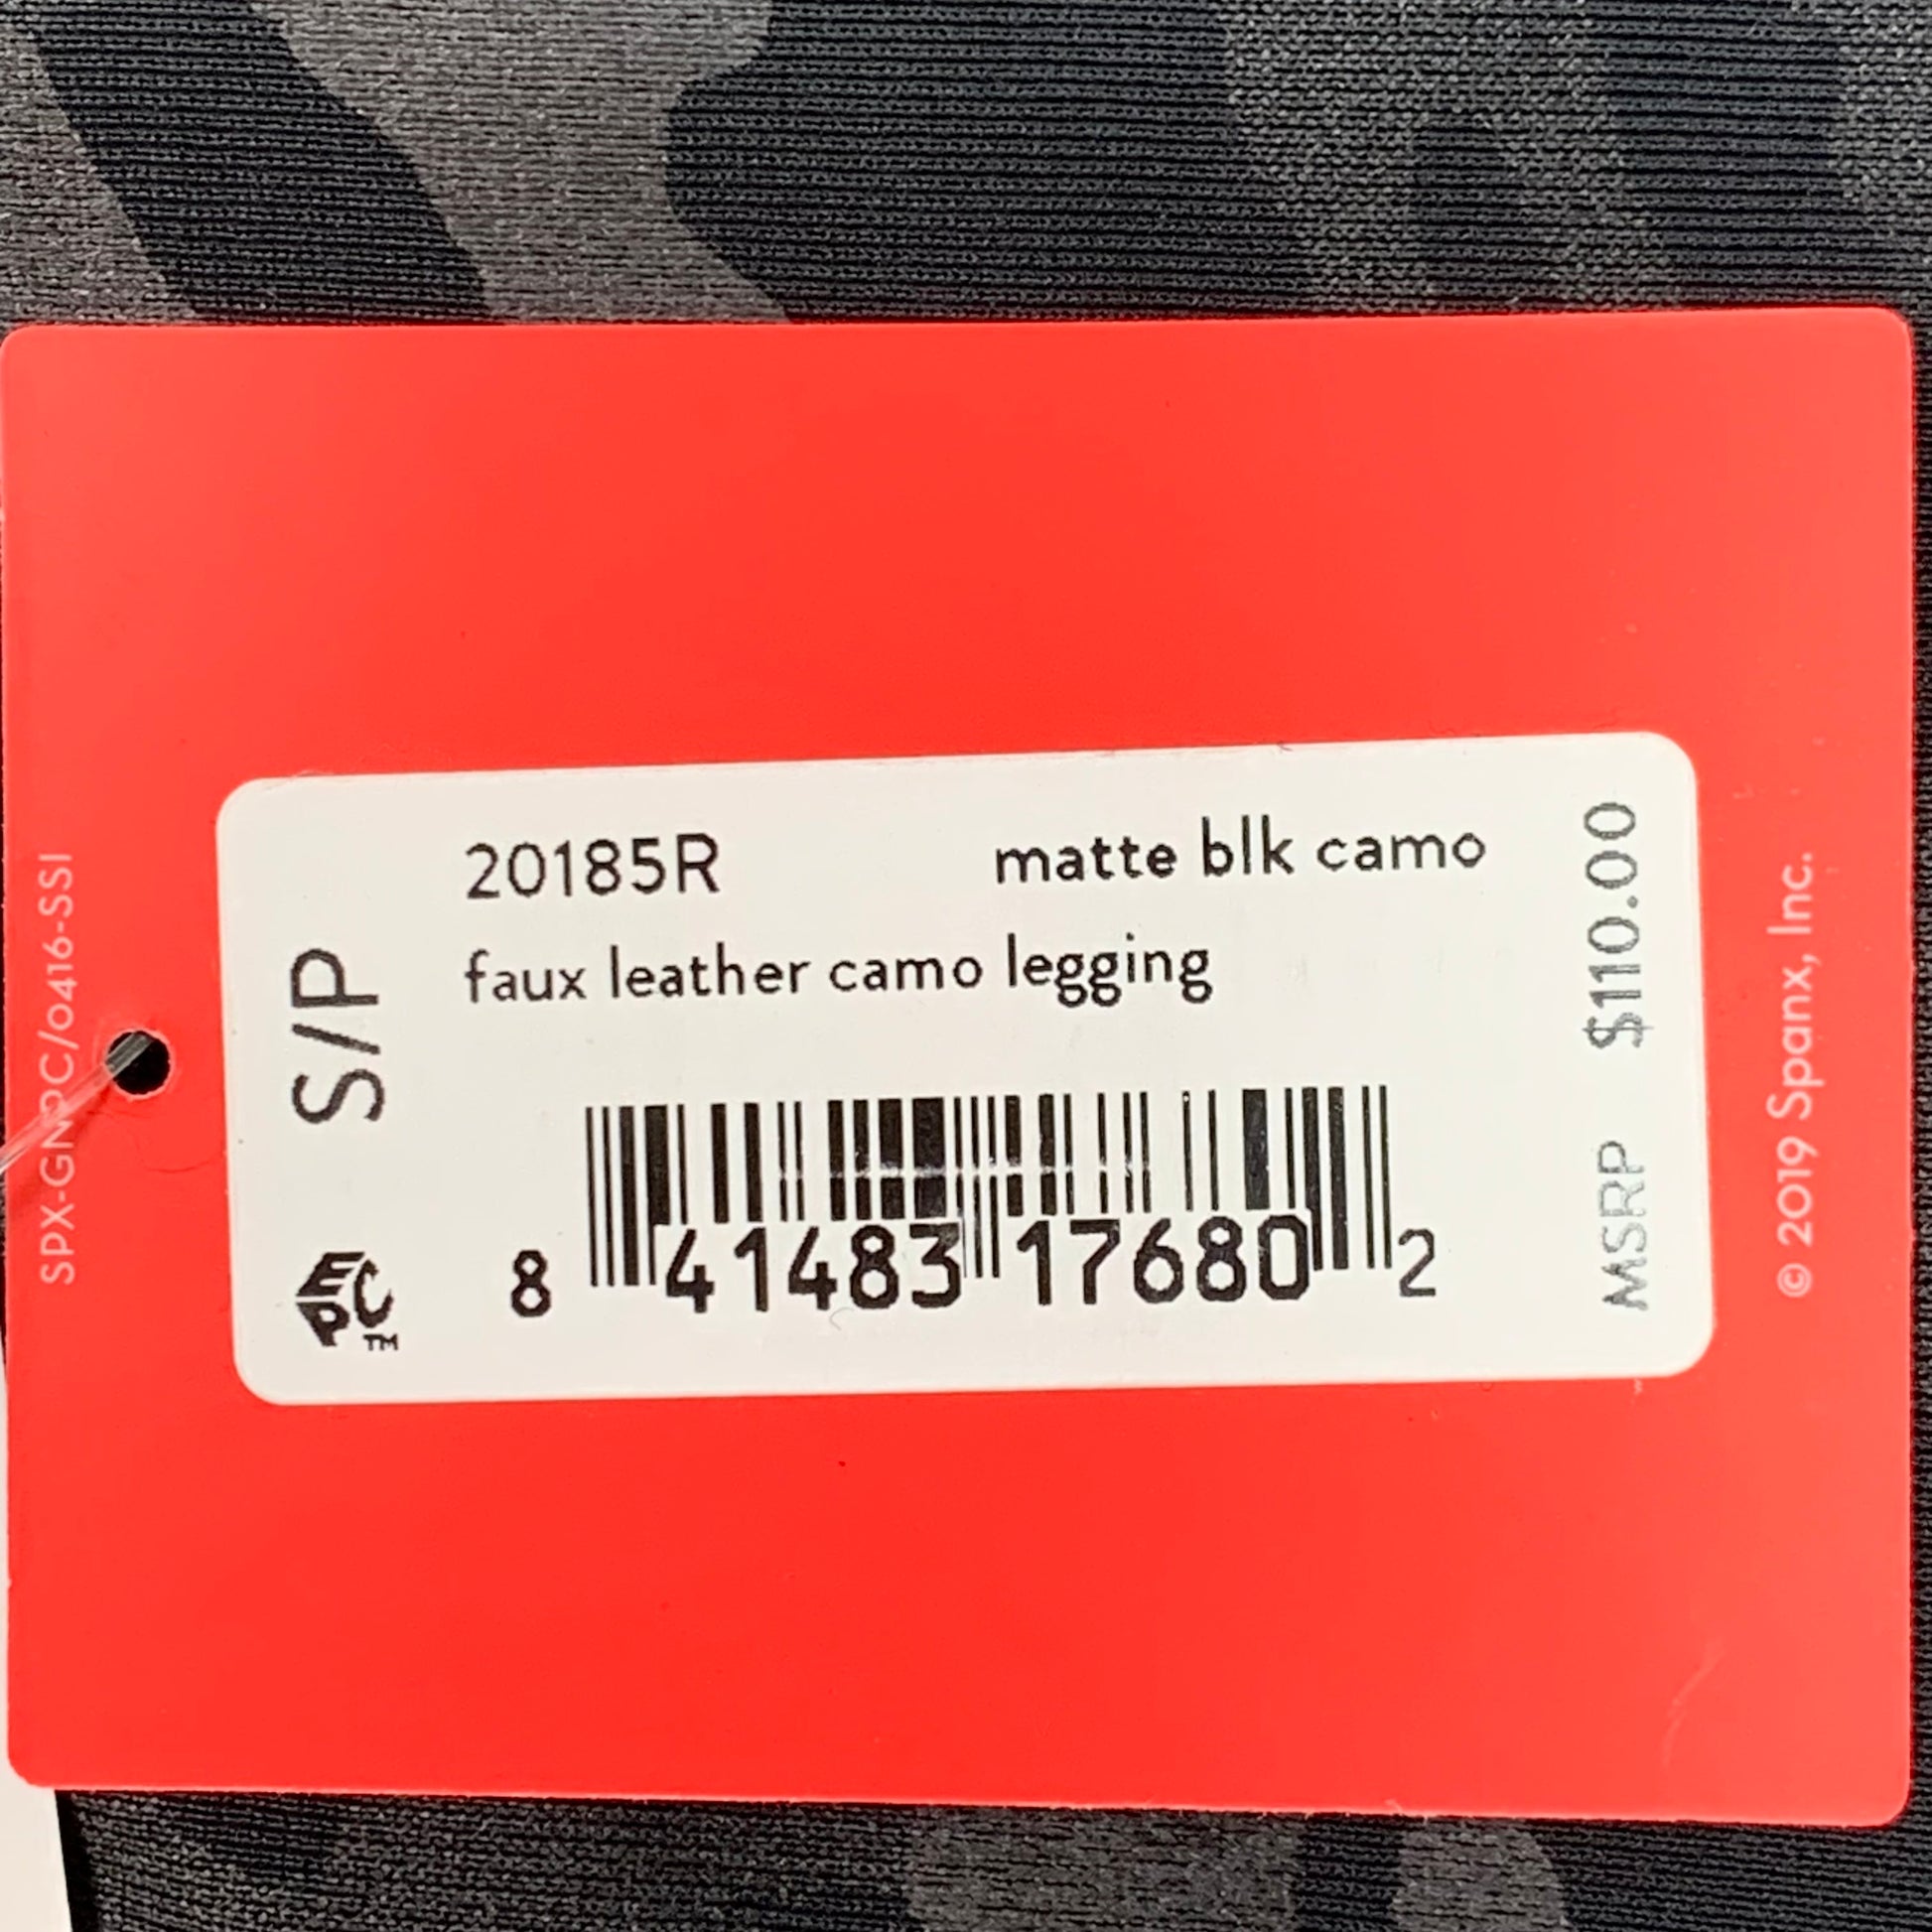 Spanx - Faux Leather Camo Leggings in Matte Black Camo – Blond Genius